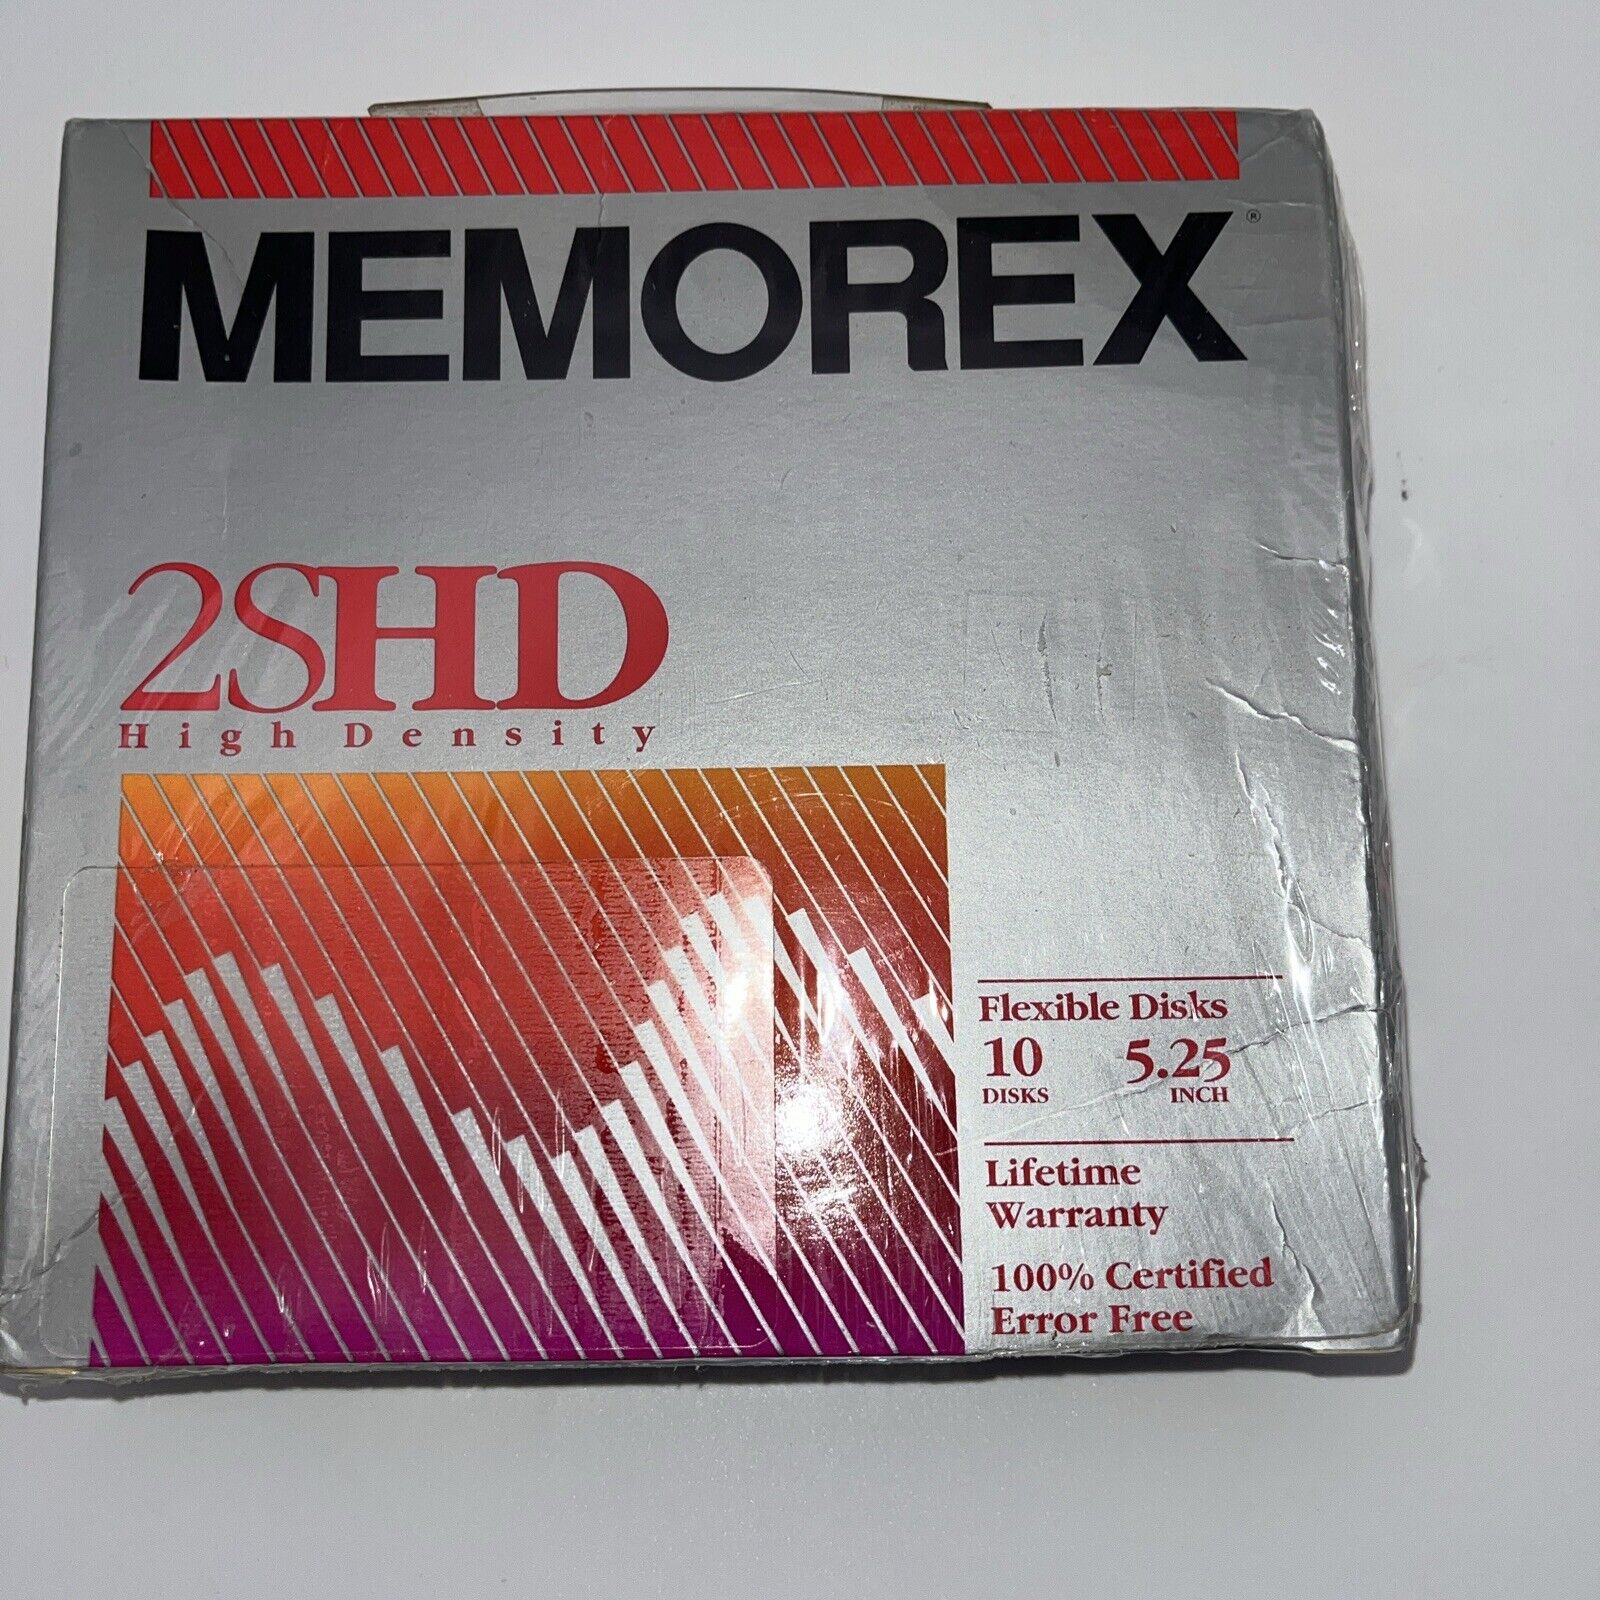 Memorex 2SHD Flexible Disks 10Pk 5.25” Disc NEW NOS Floppy Disk 5660